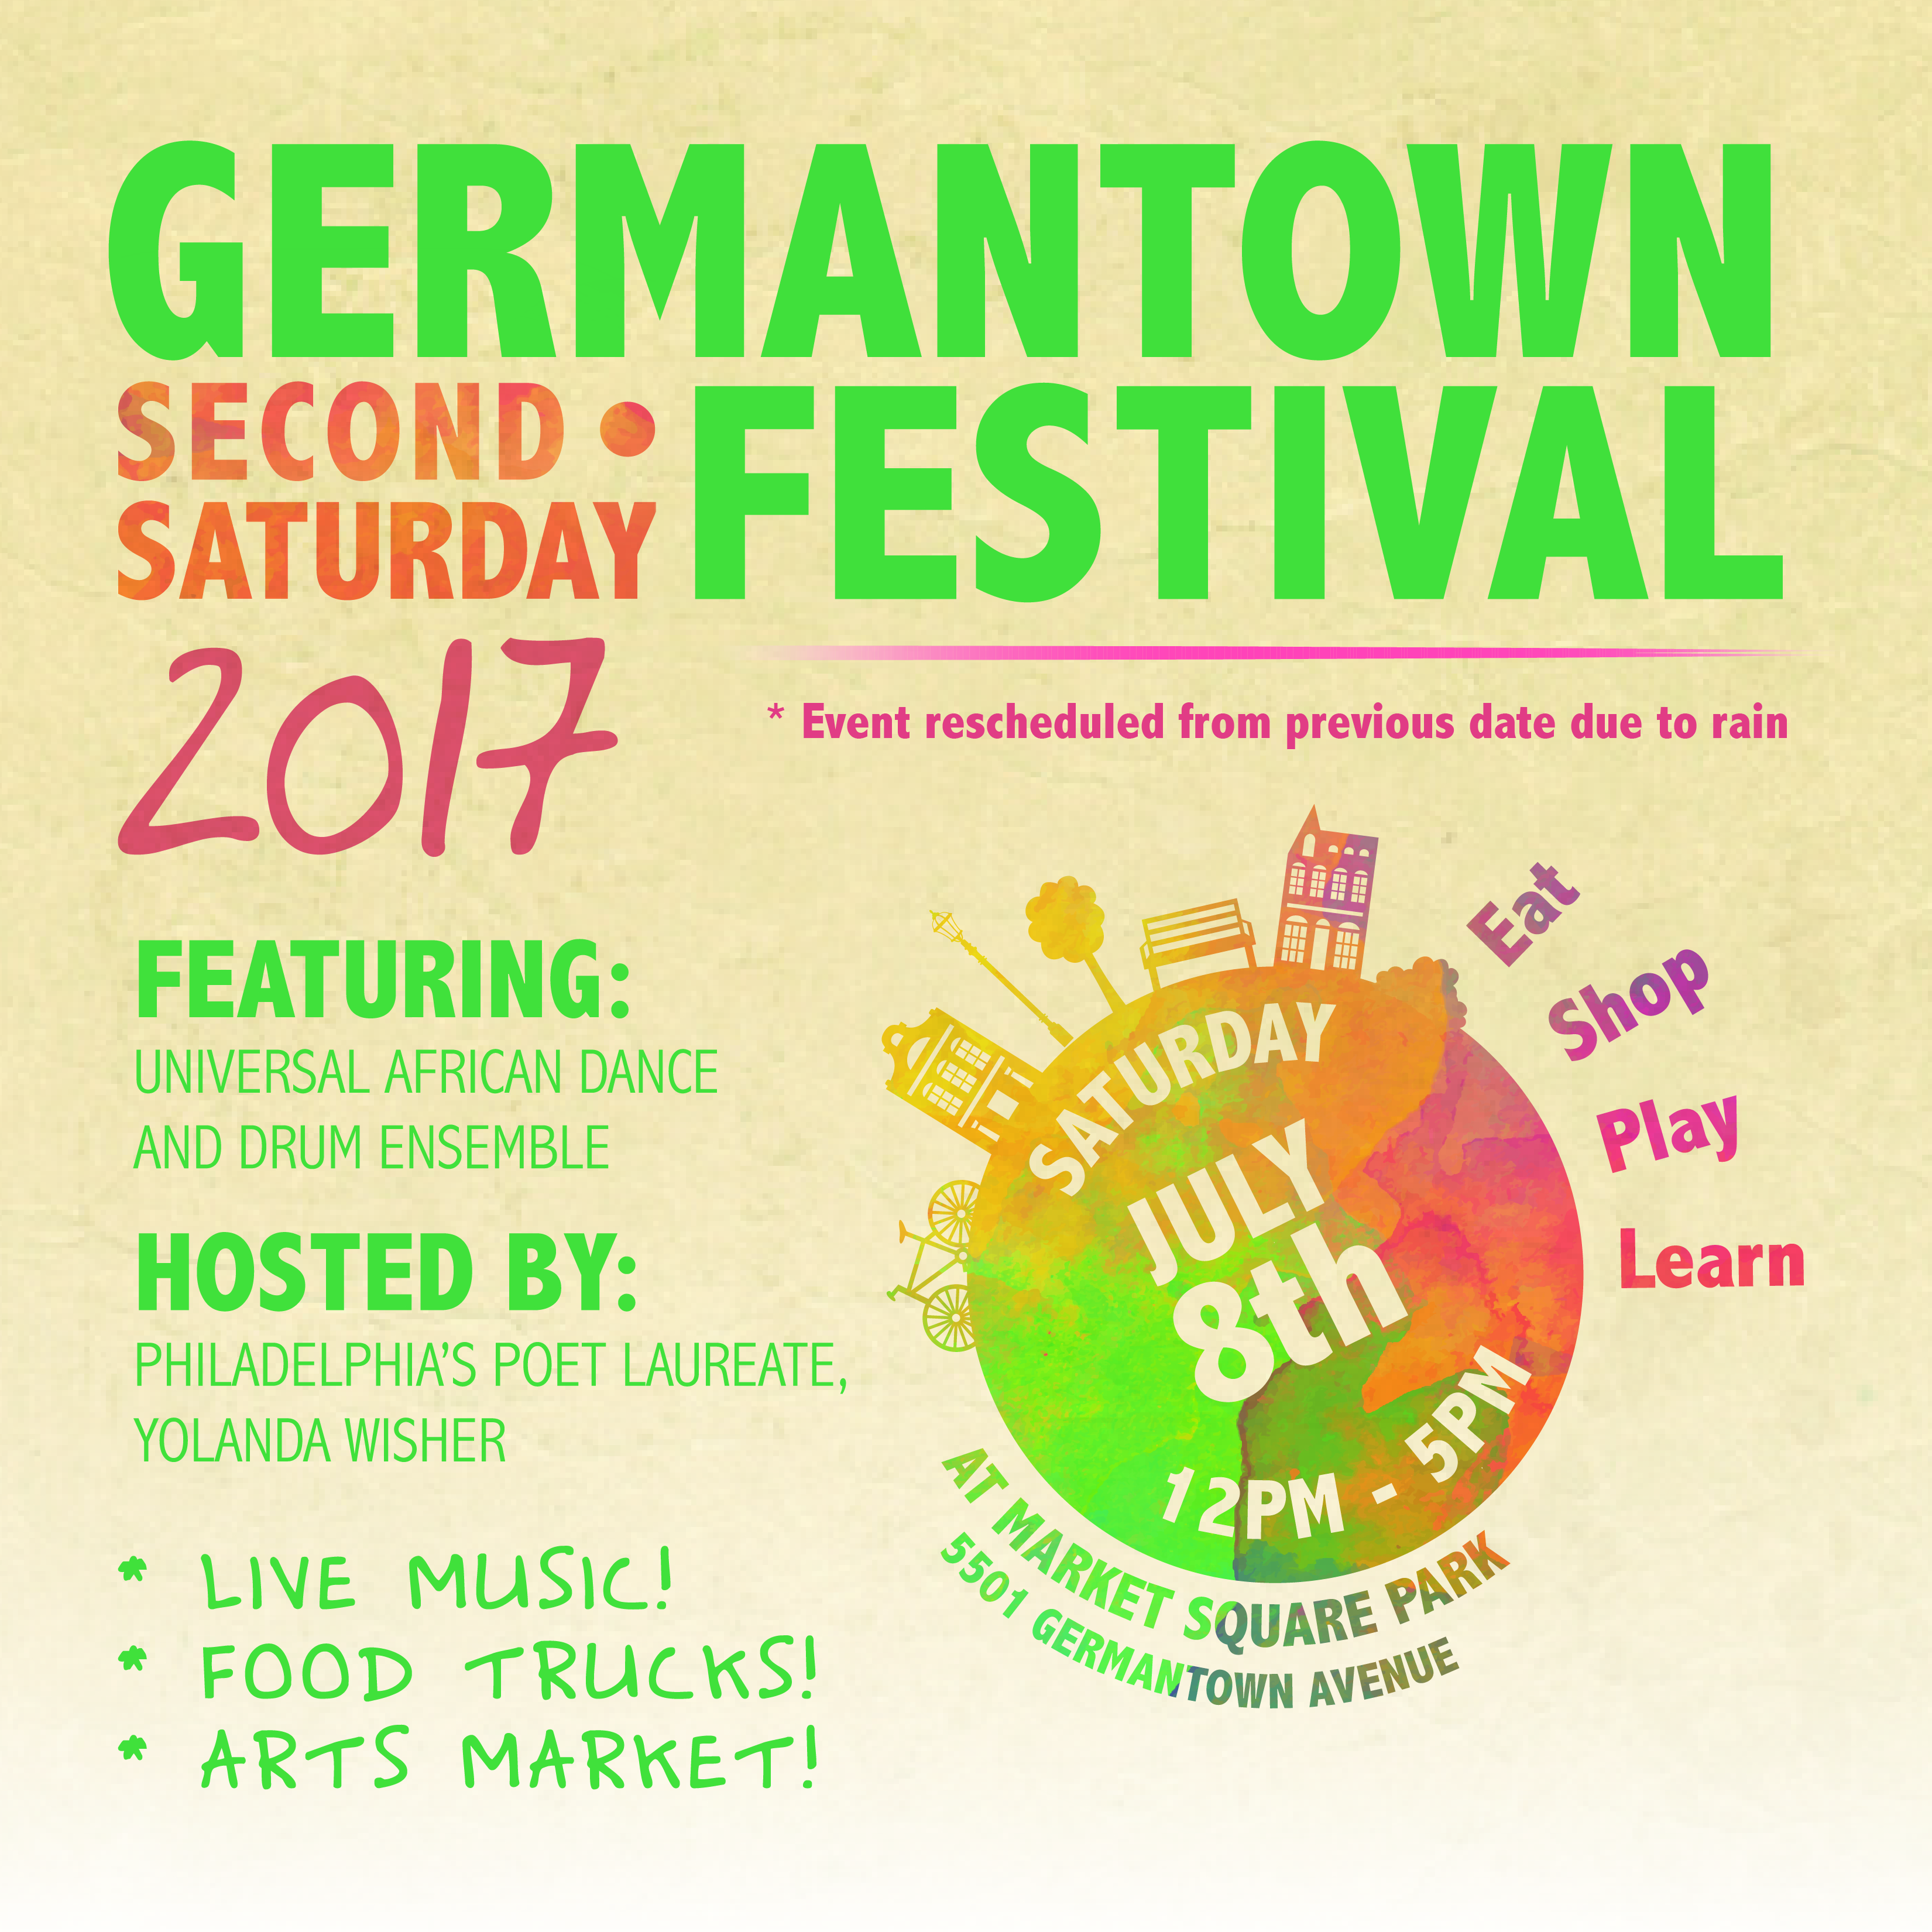 Germantown Second Saturday Festival is